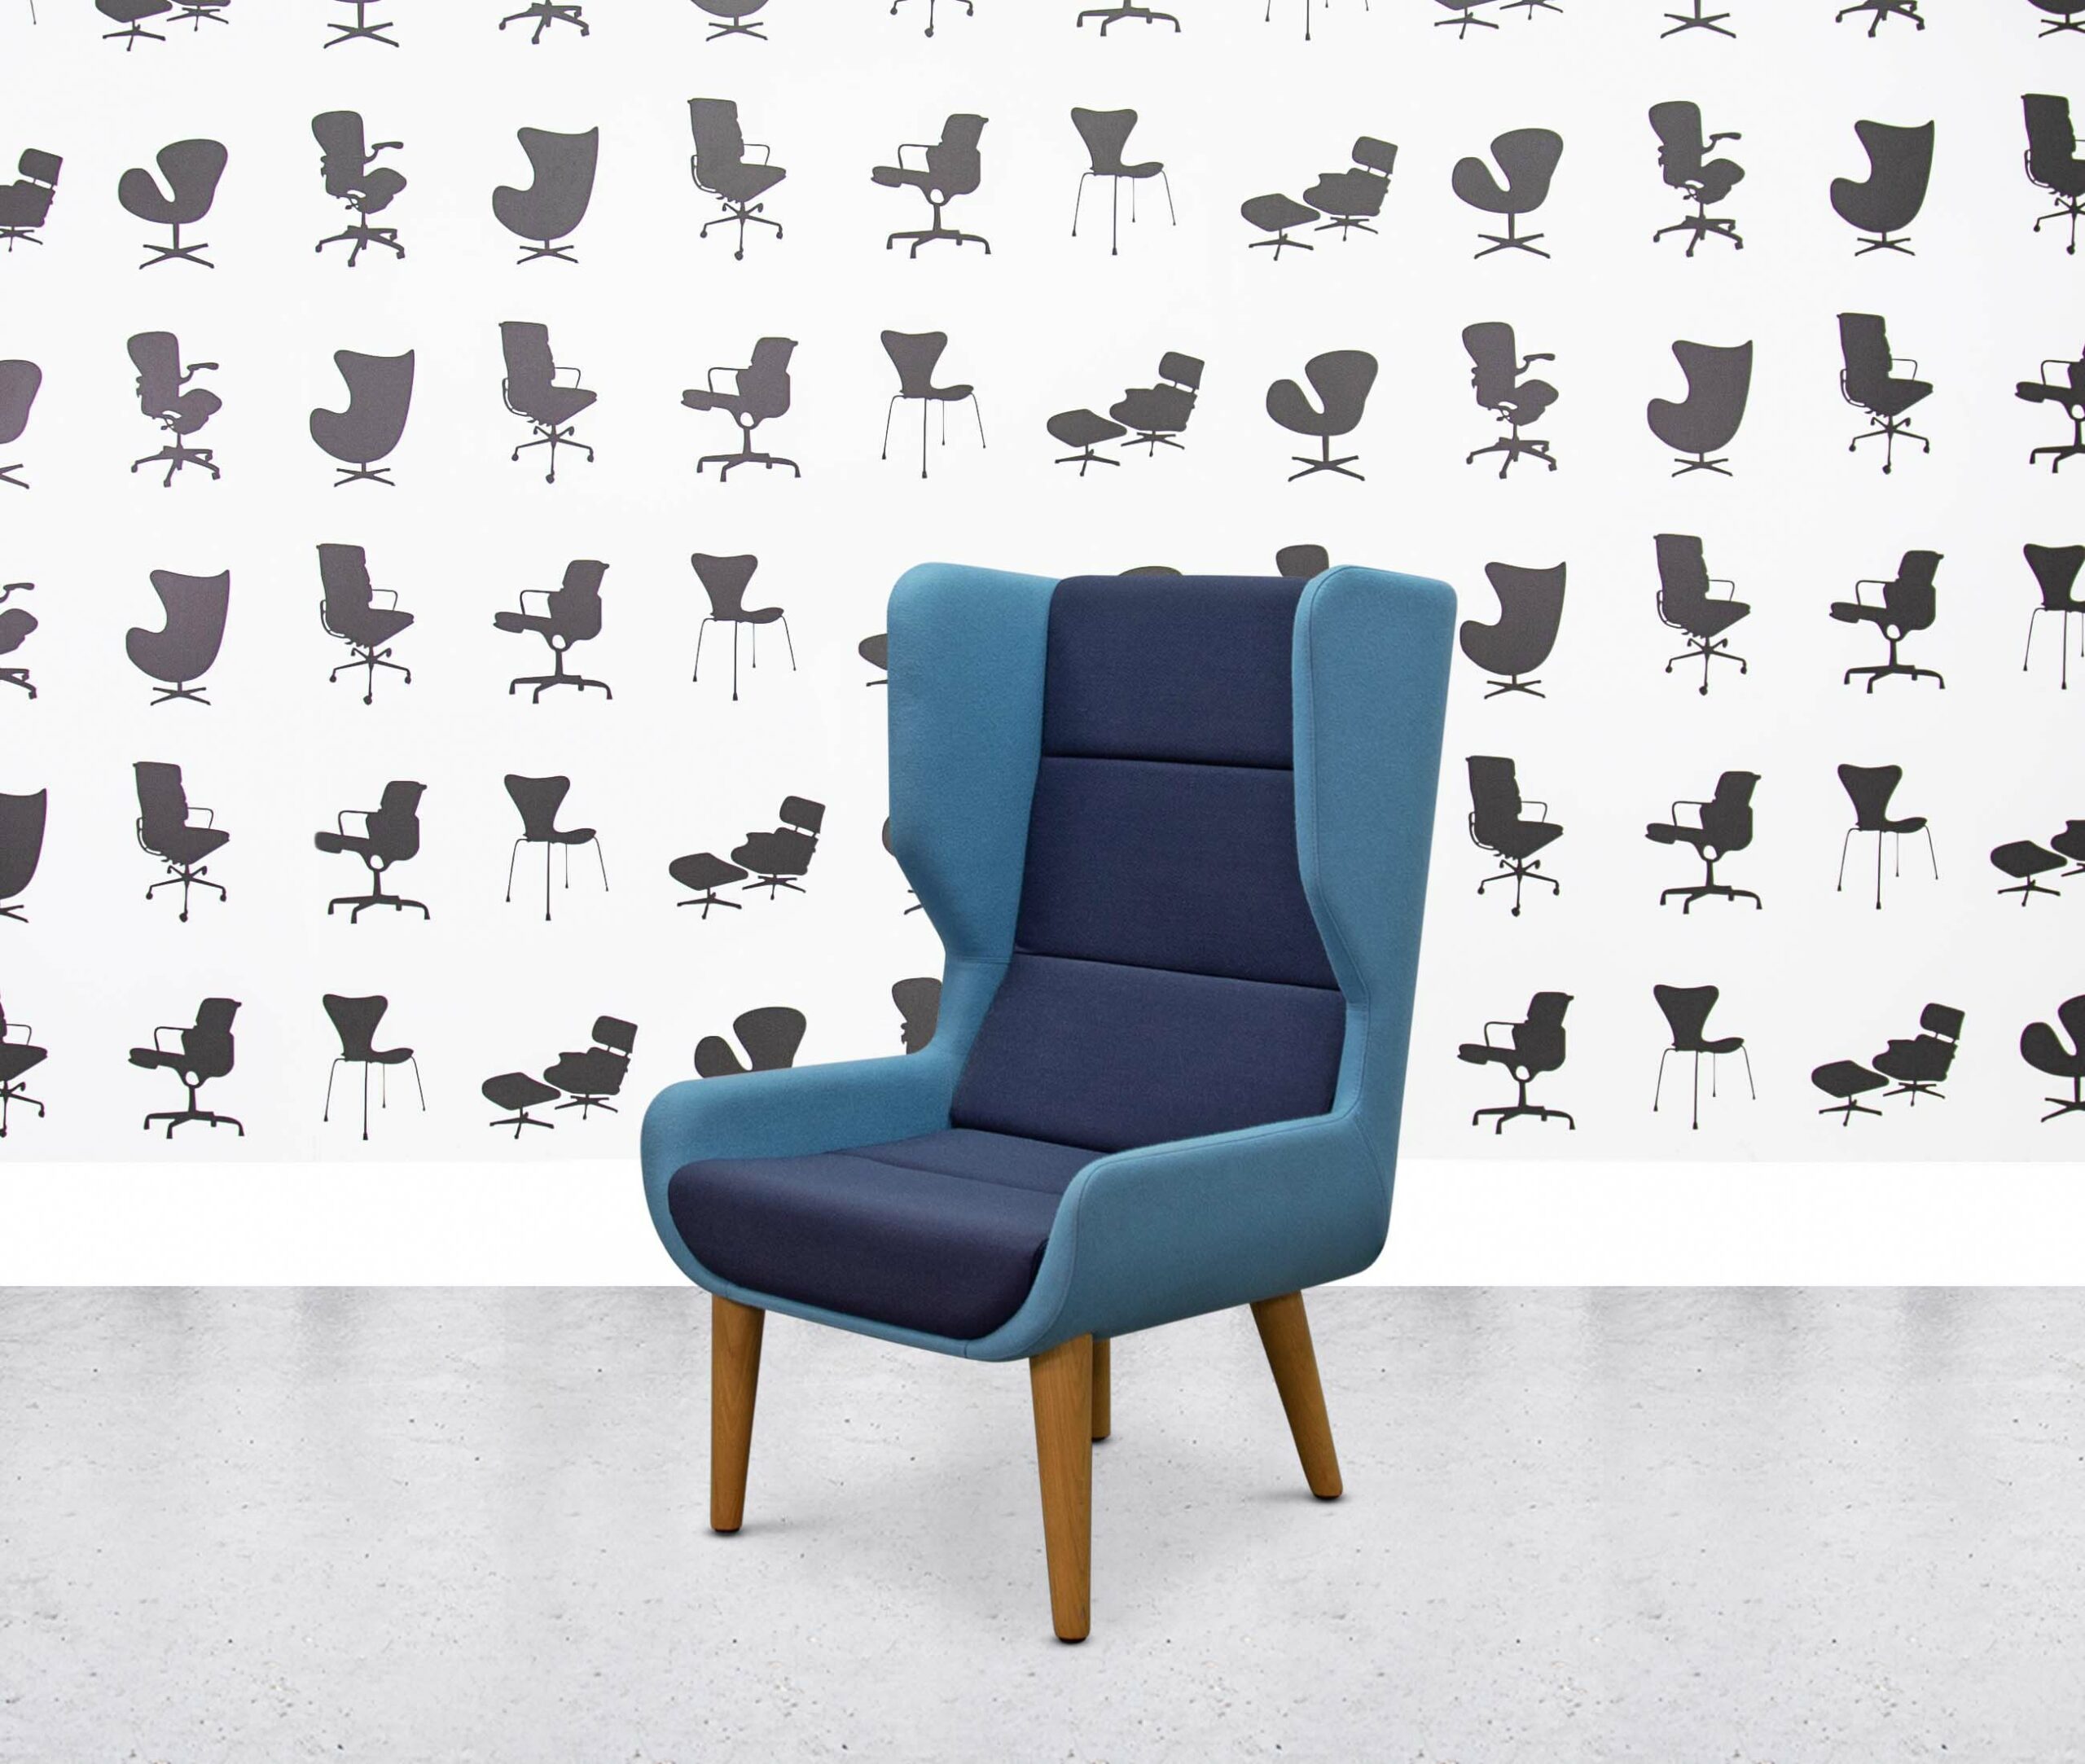 Refurbished Naughtone Hush BWD Lounge Chair - Navy and Light Blue